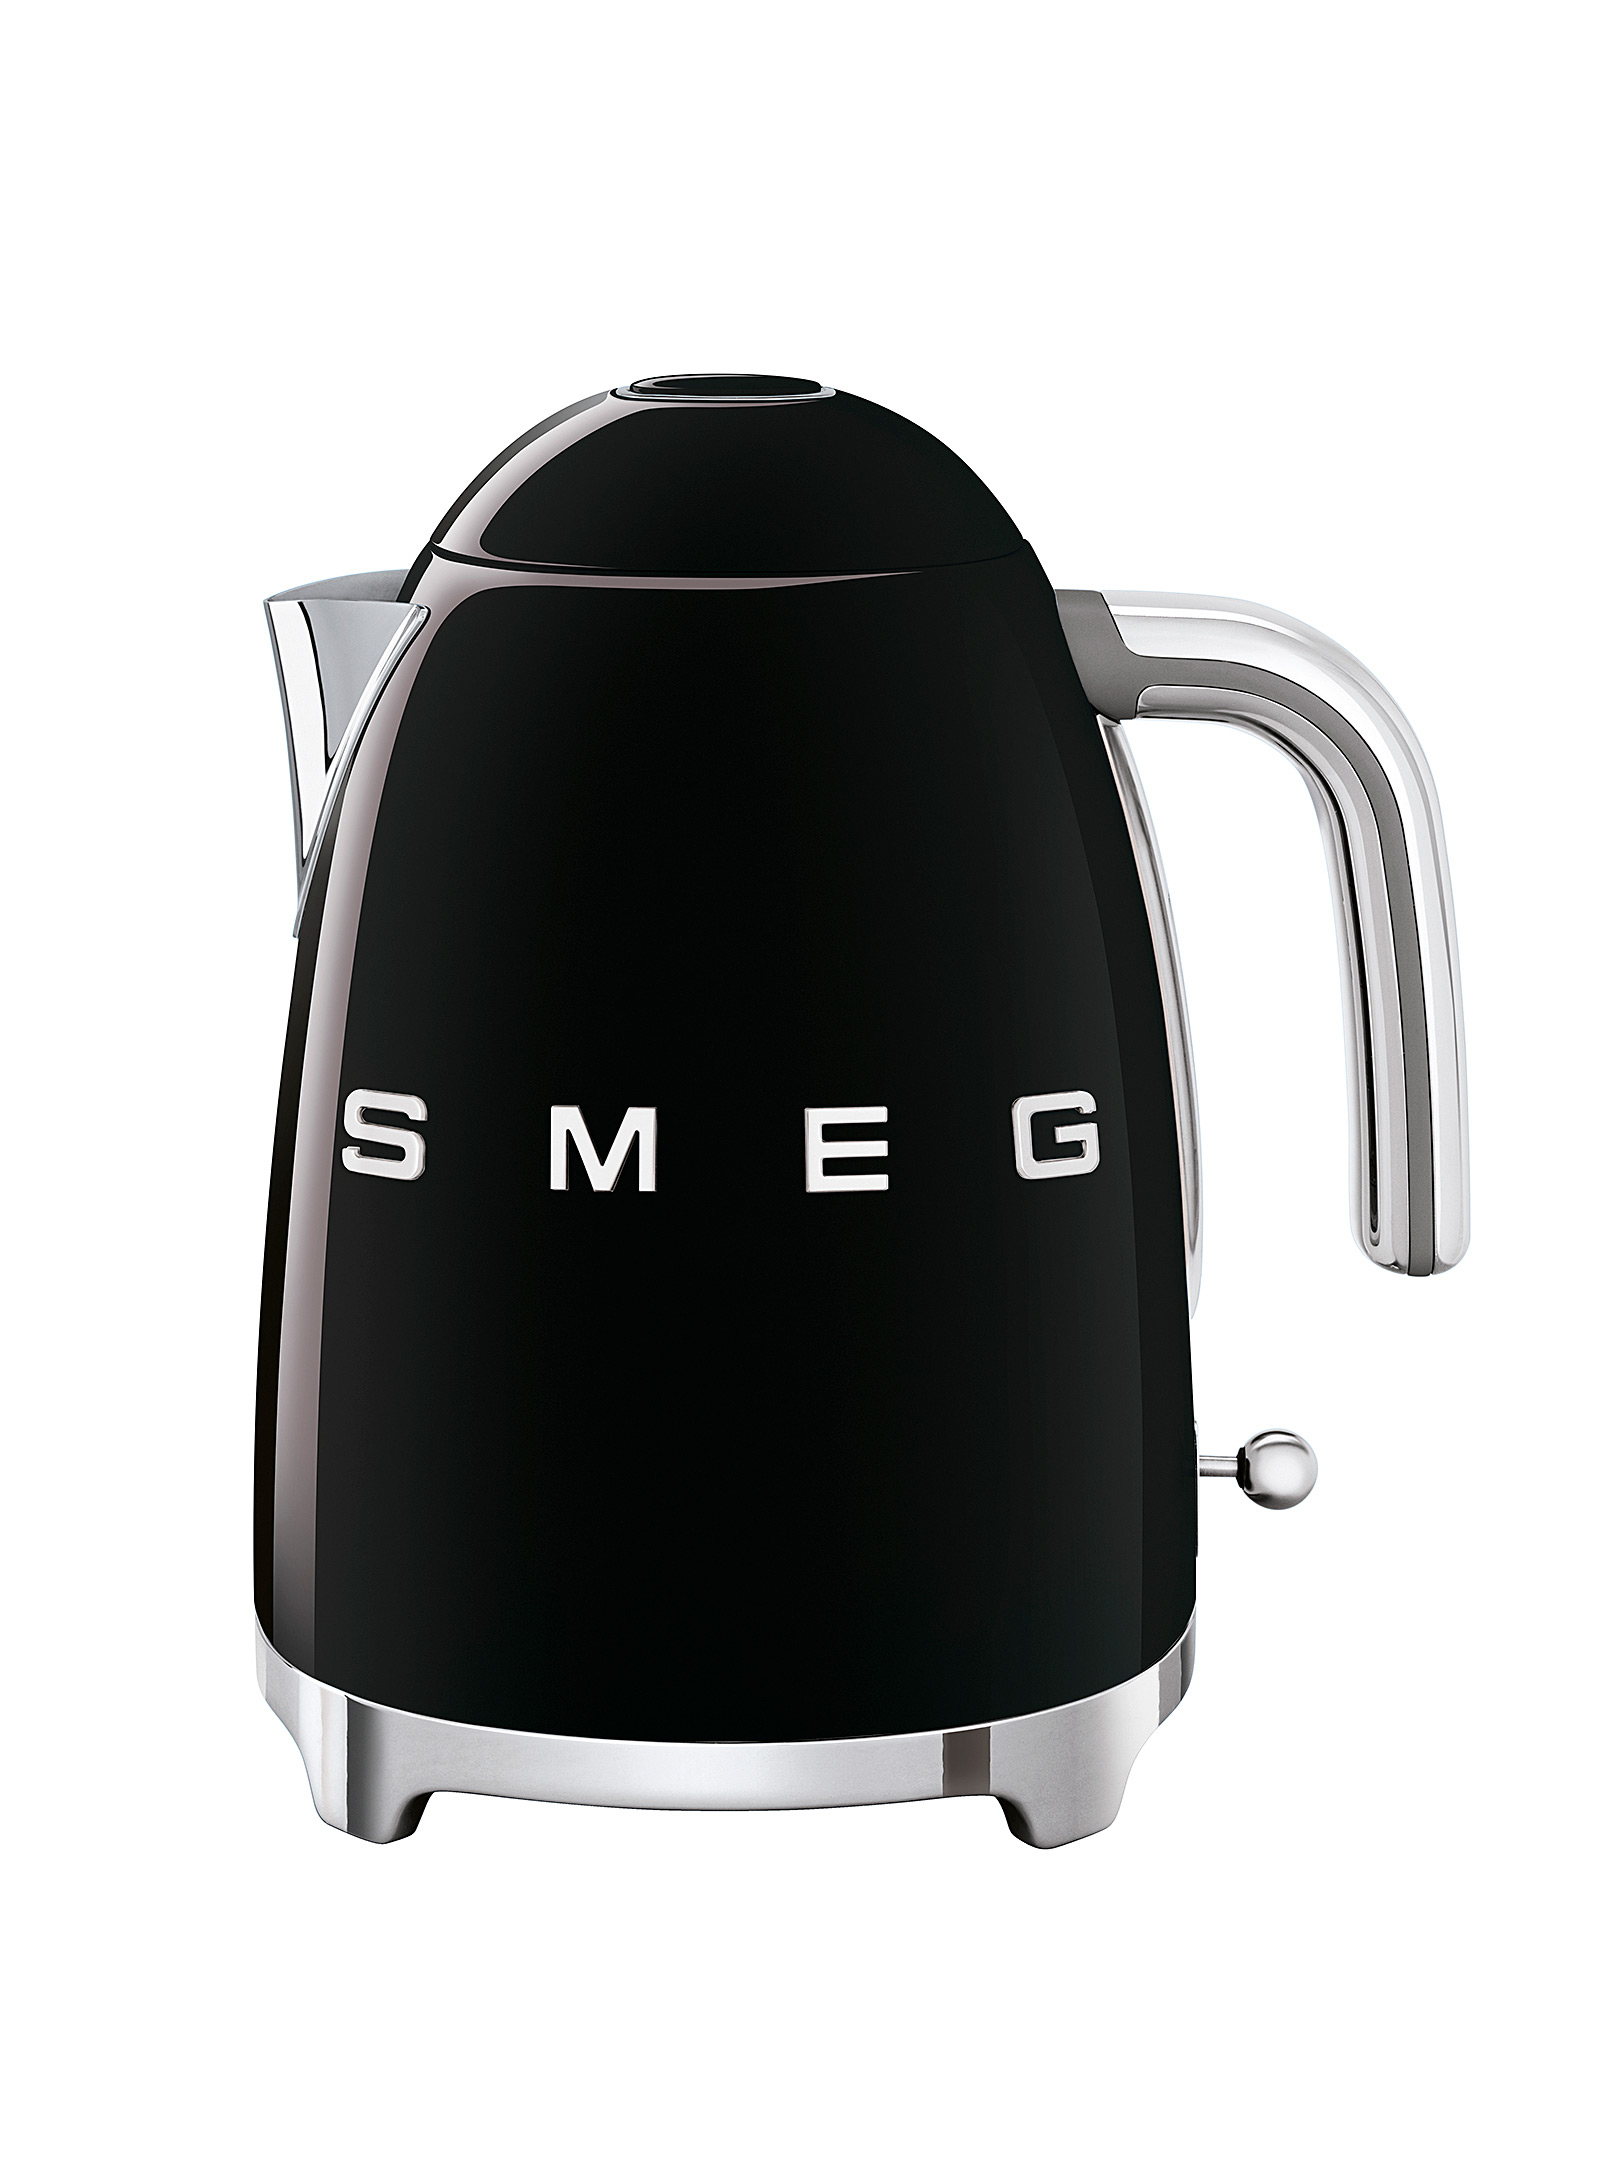 Smeg - Retro electric kettle